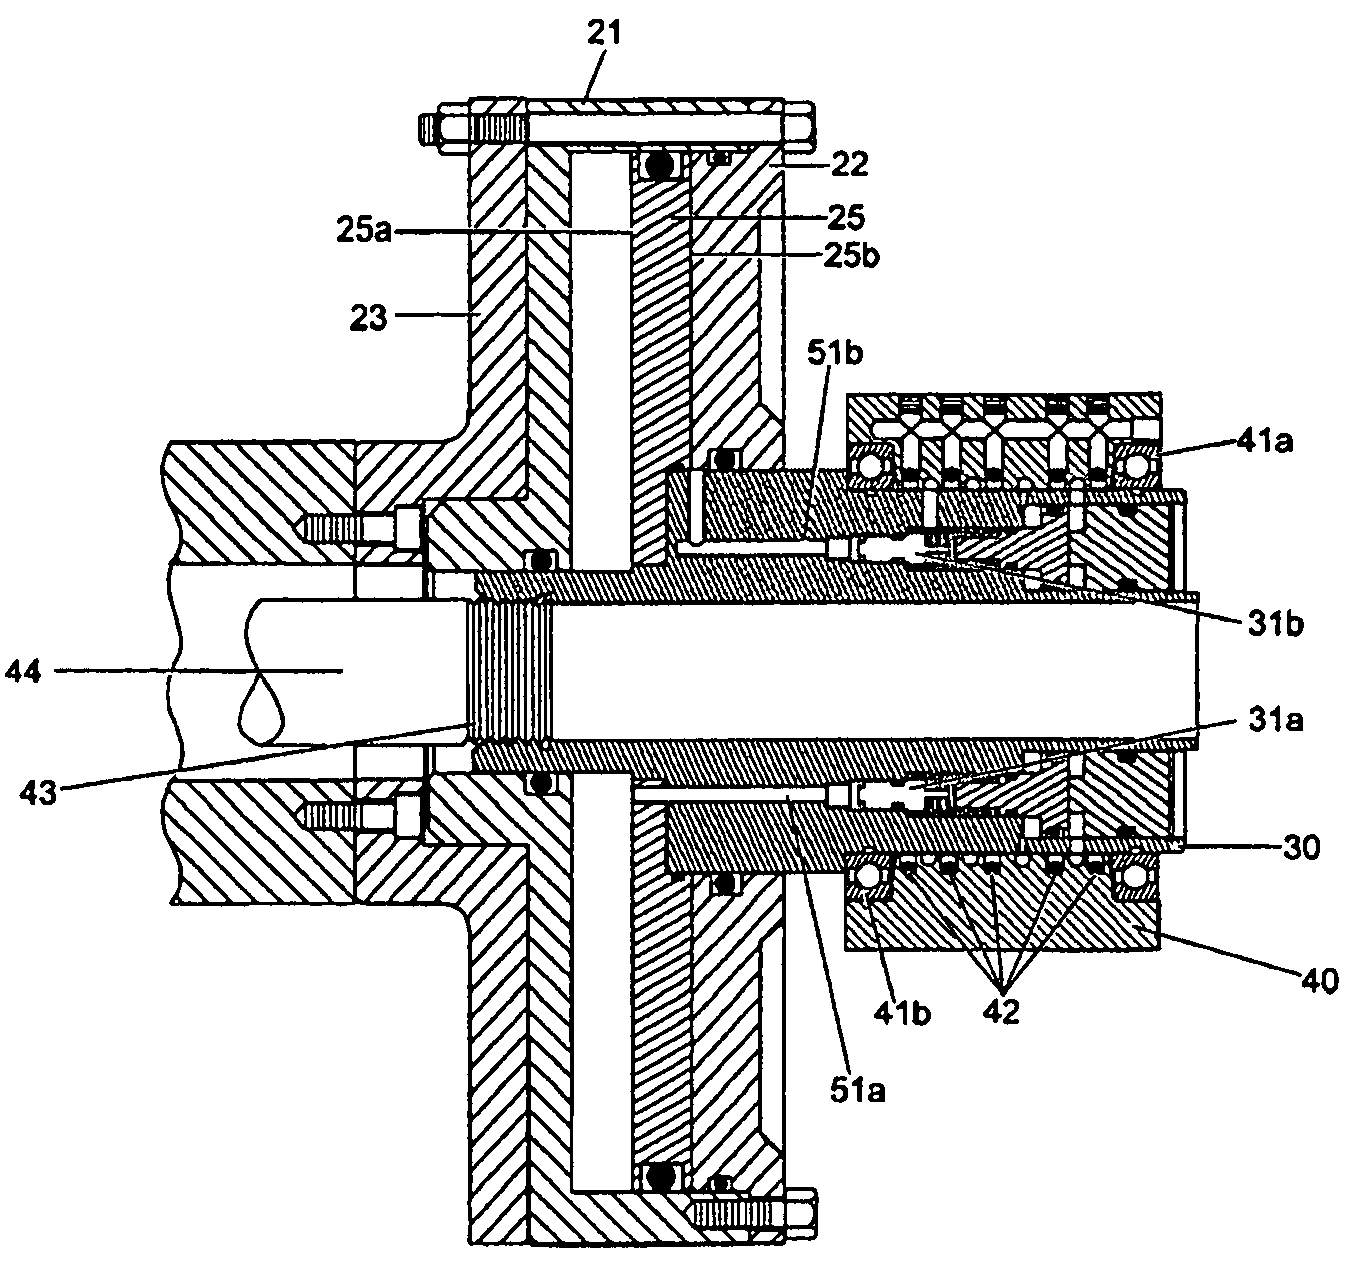 Linear actuator for rotating shaft assemblies